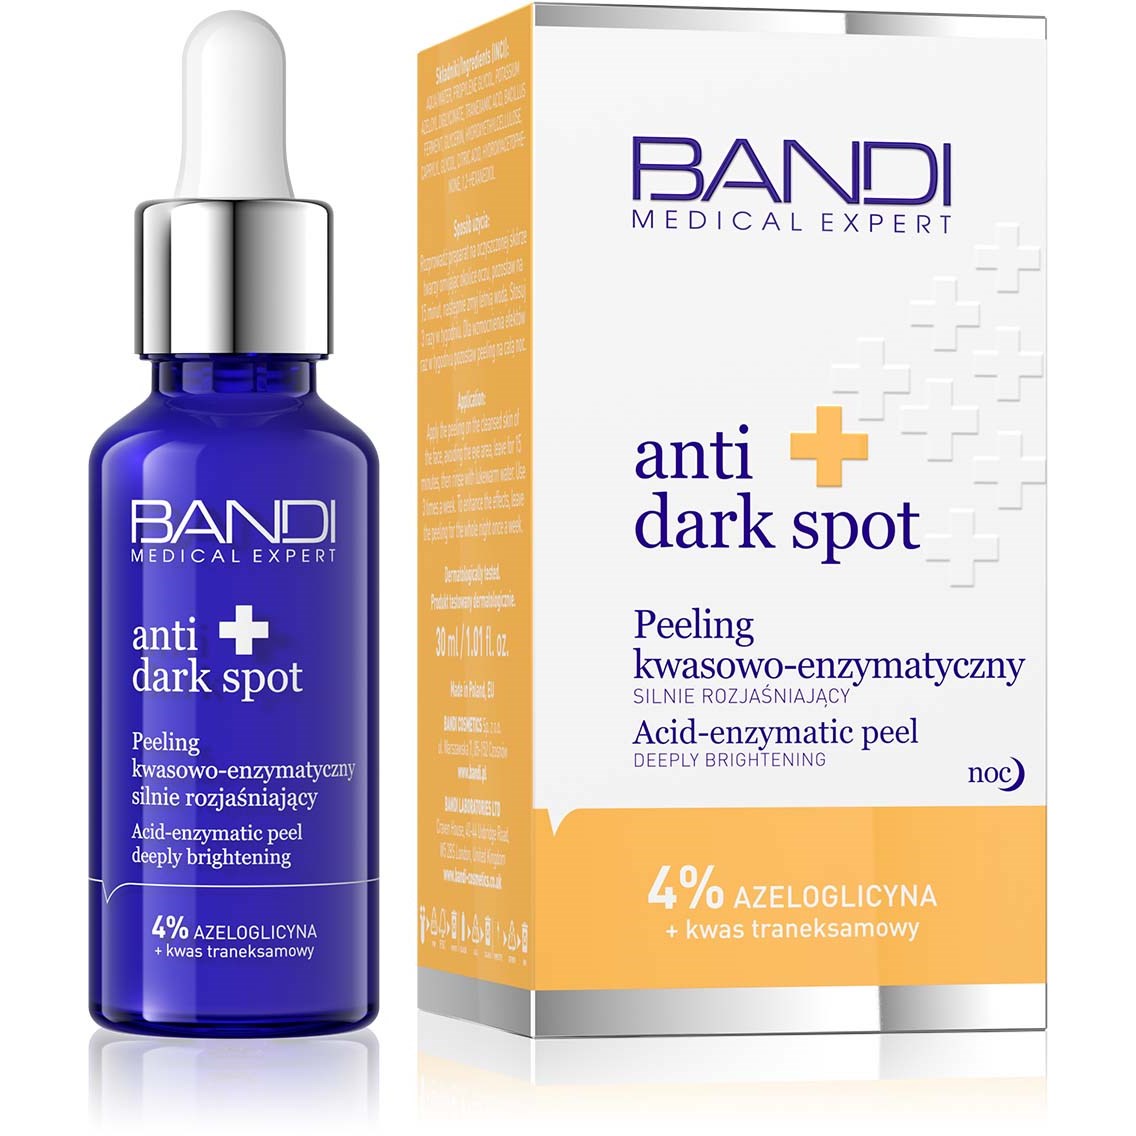 Bandi MEDICAL anti dark spot Acid-enzymatic peel deeply brightening 30